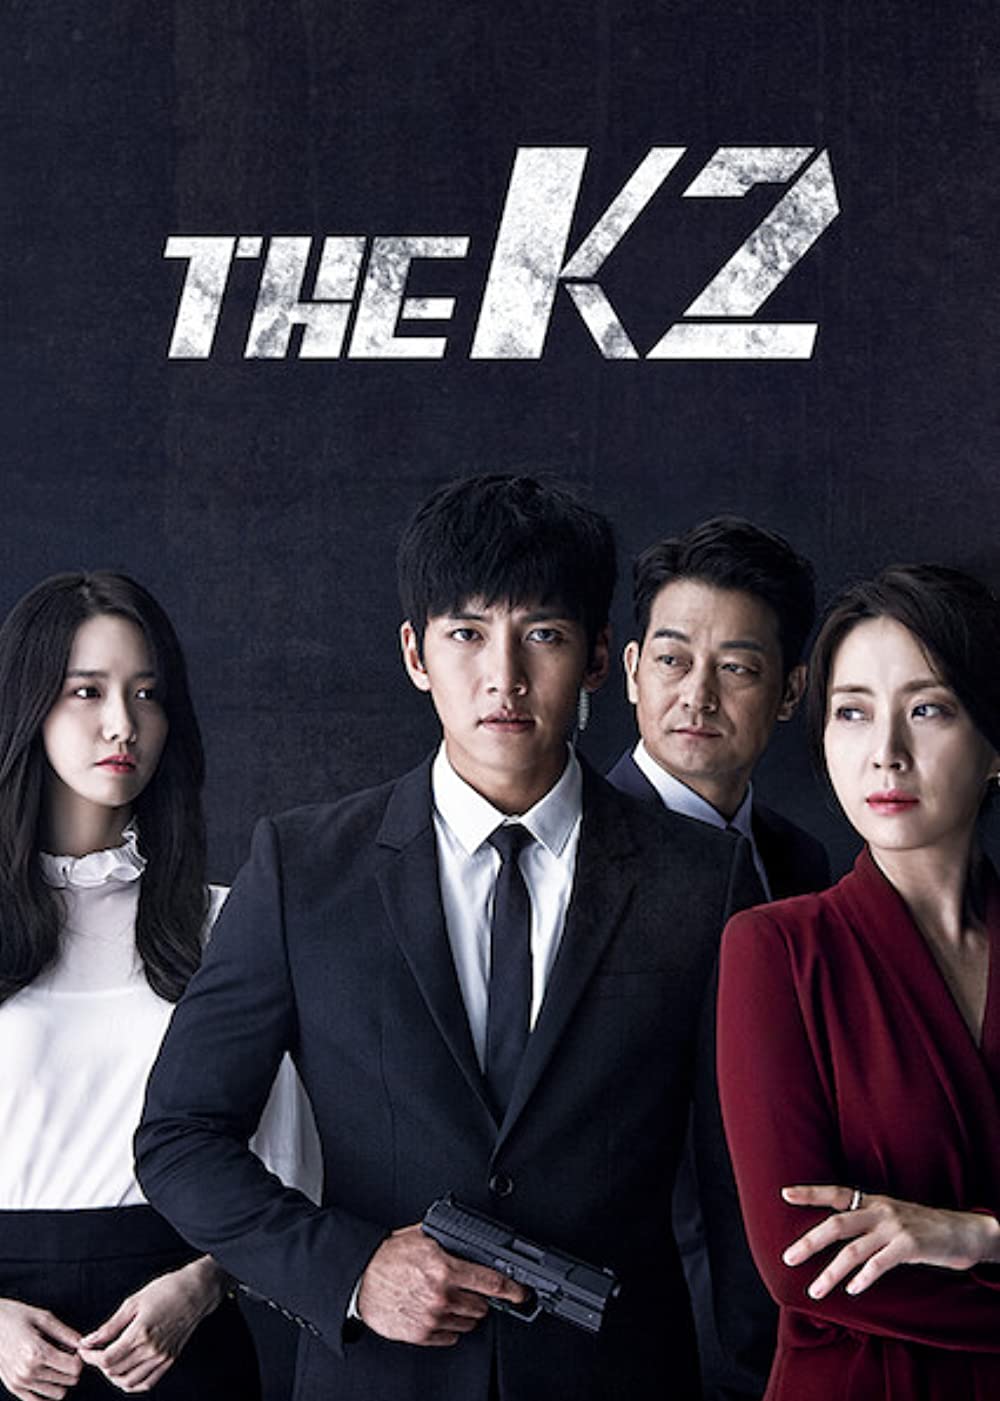 11 Judul drama Korea bikin geregetan, Bad and Crazy bisa ikutan mukul